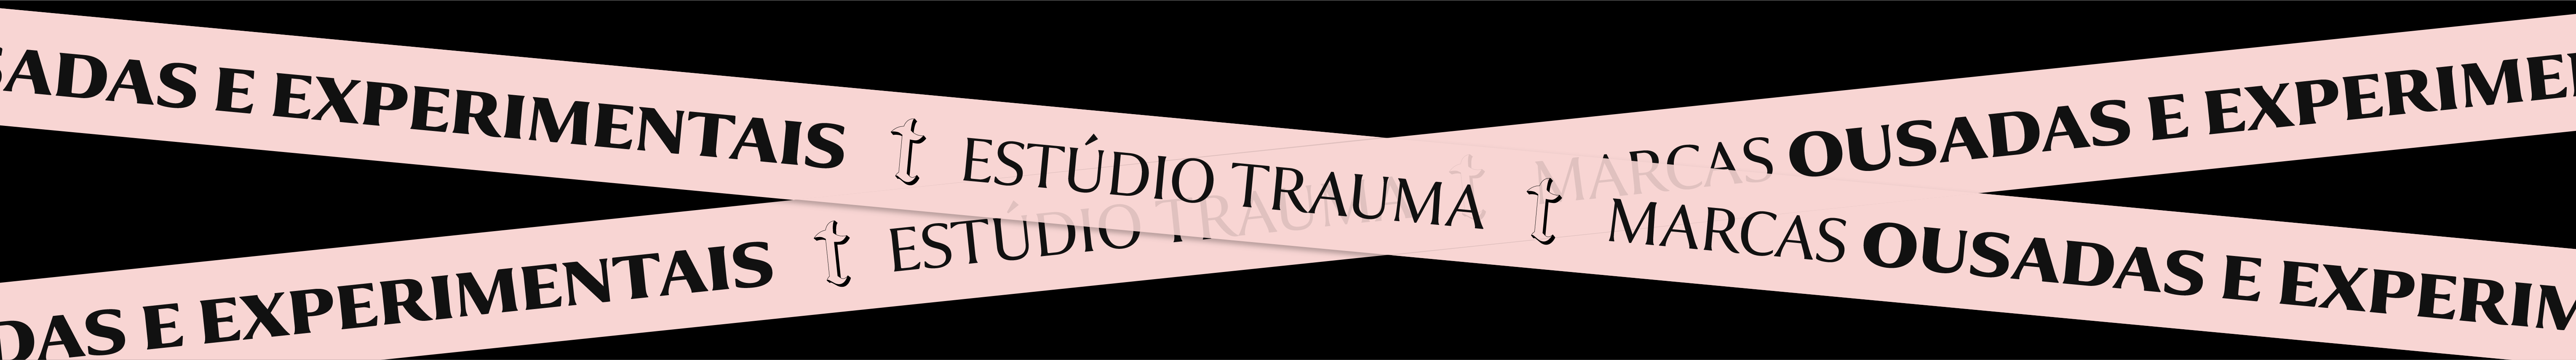 Estudio Trauma's profile banner